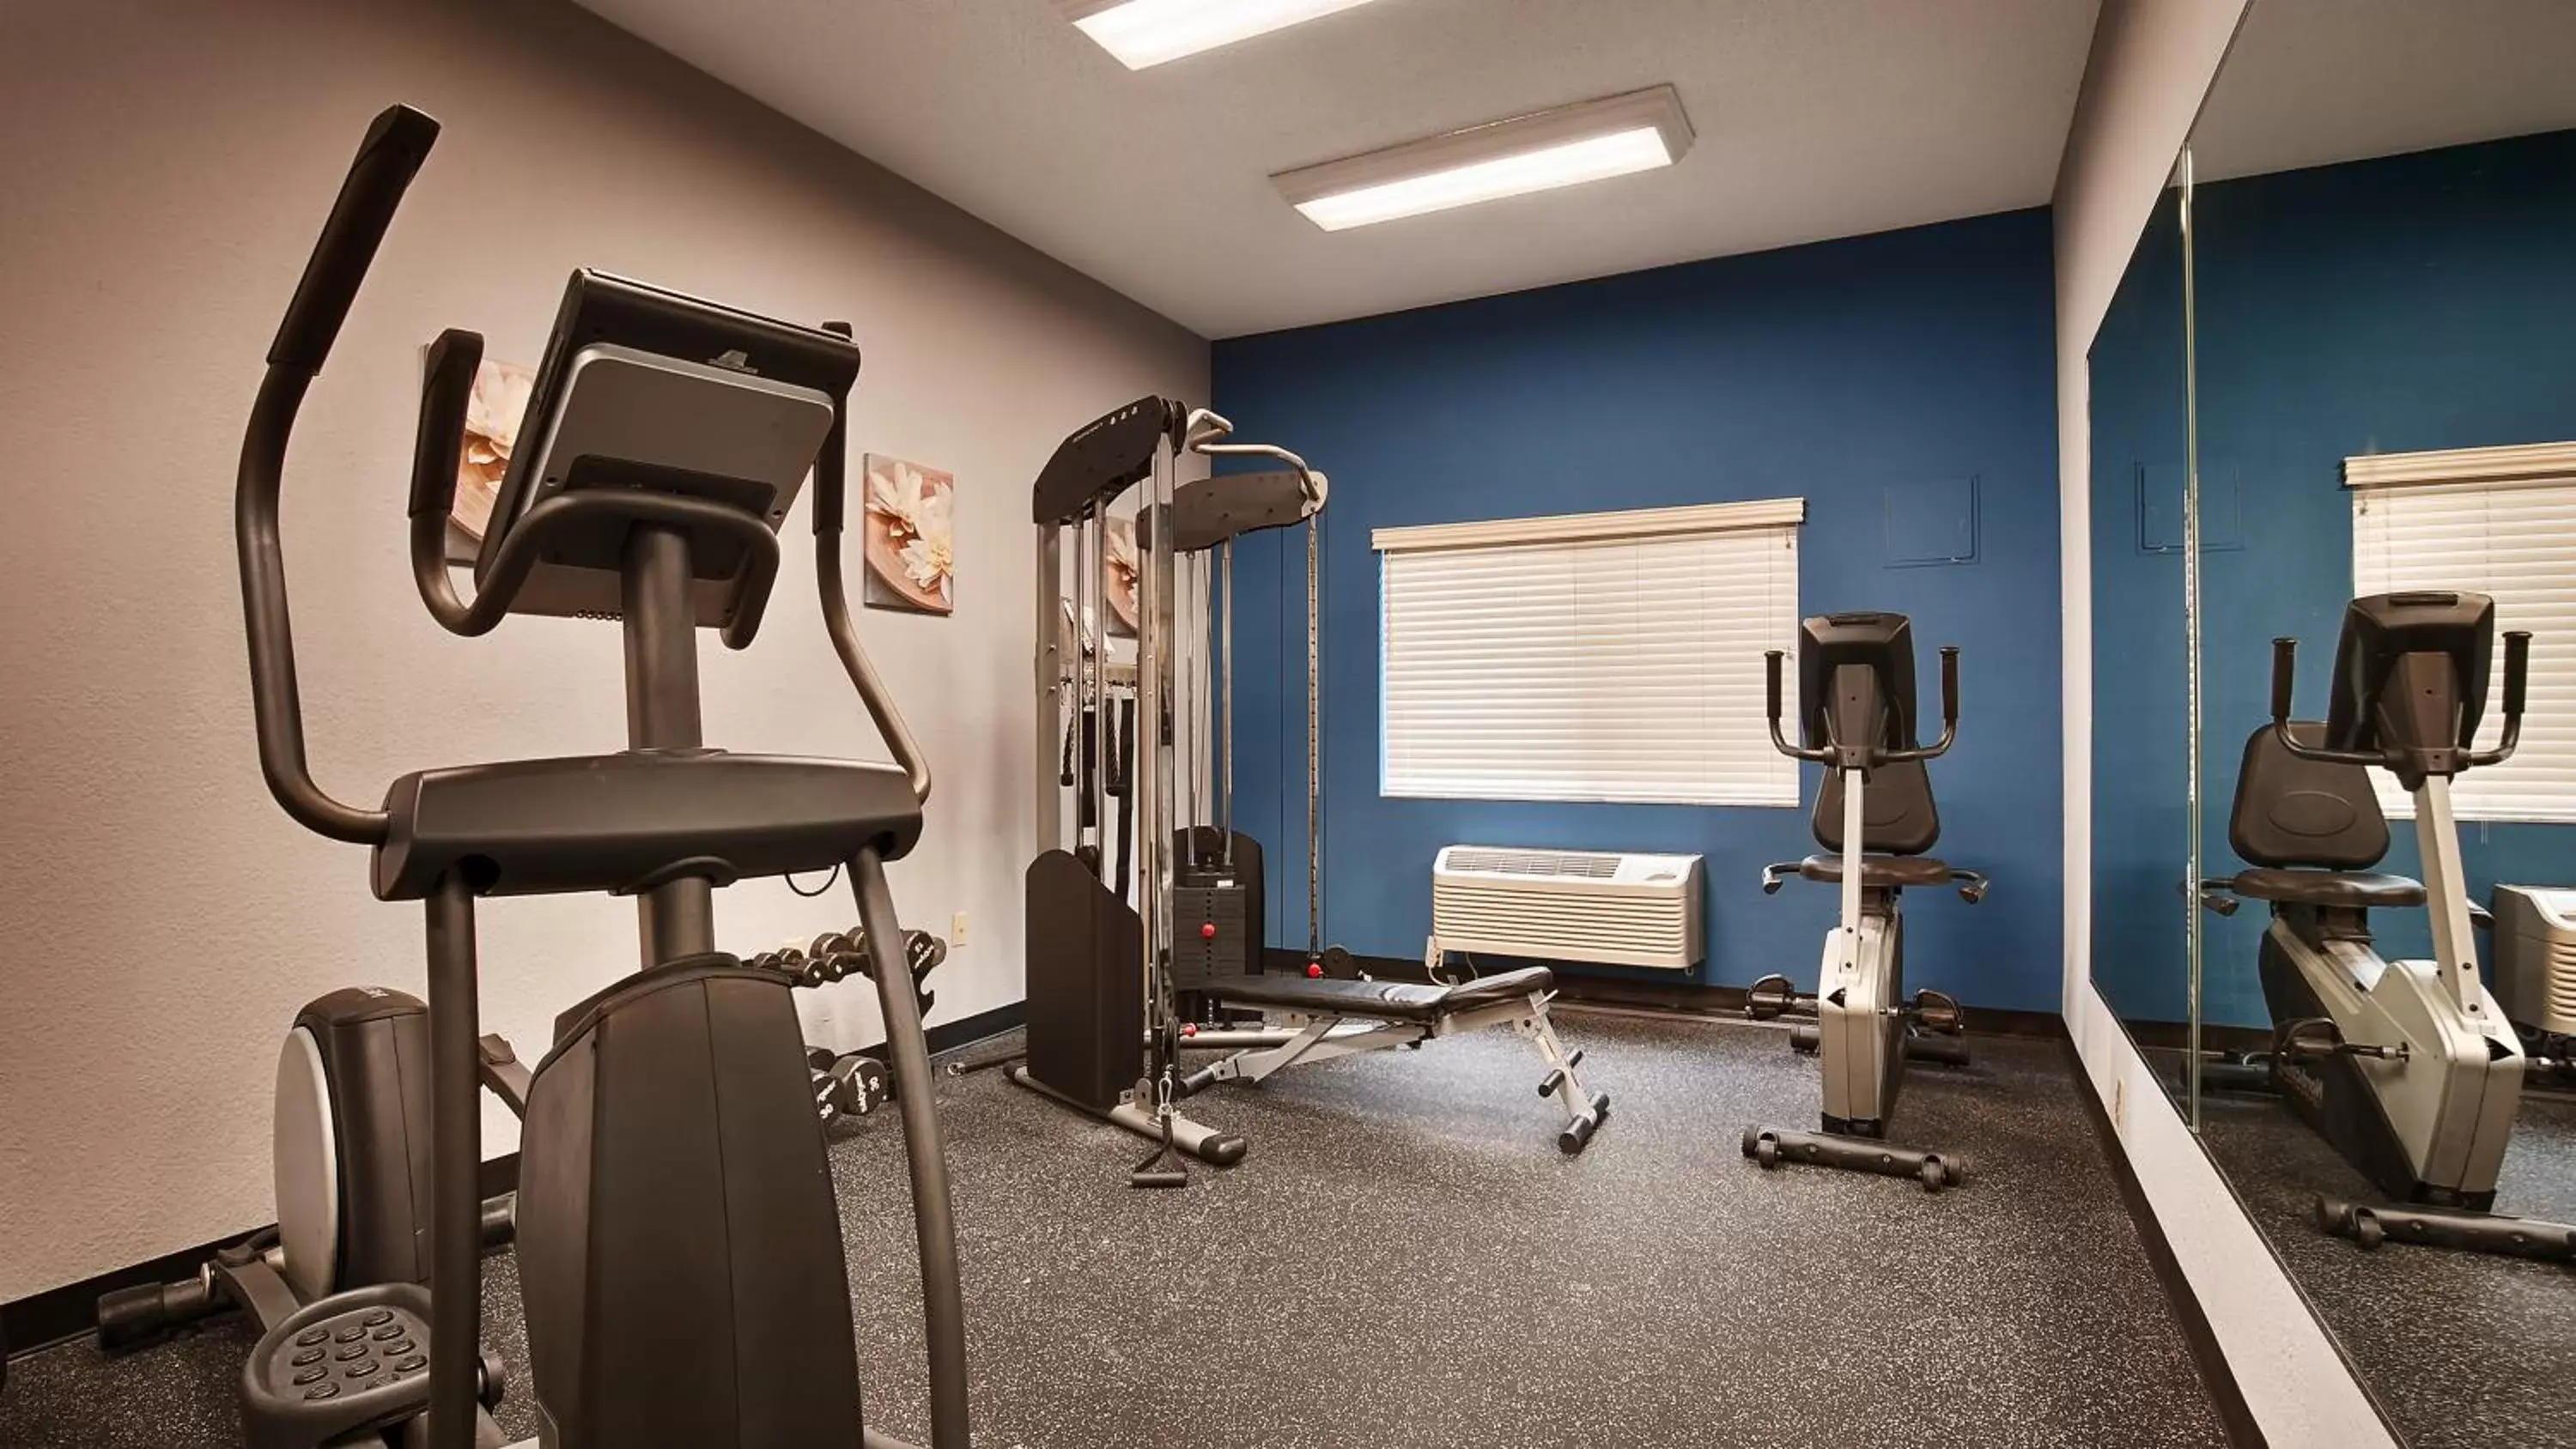 Fitness centre/facilities, Fitness Center/Facilities in Best Western Gwinnett Center